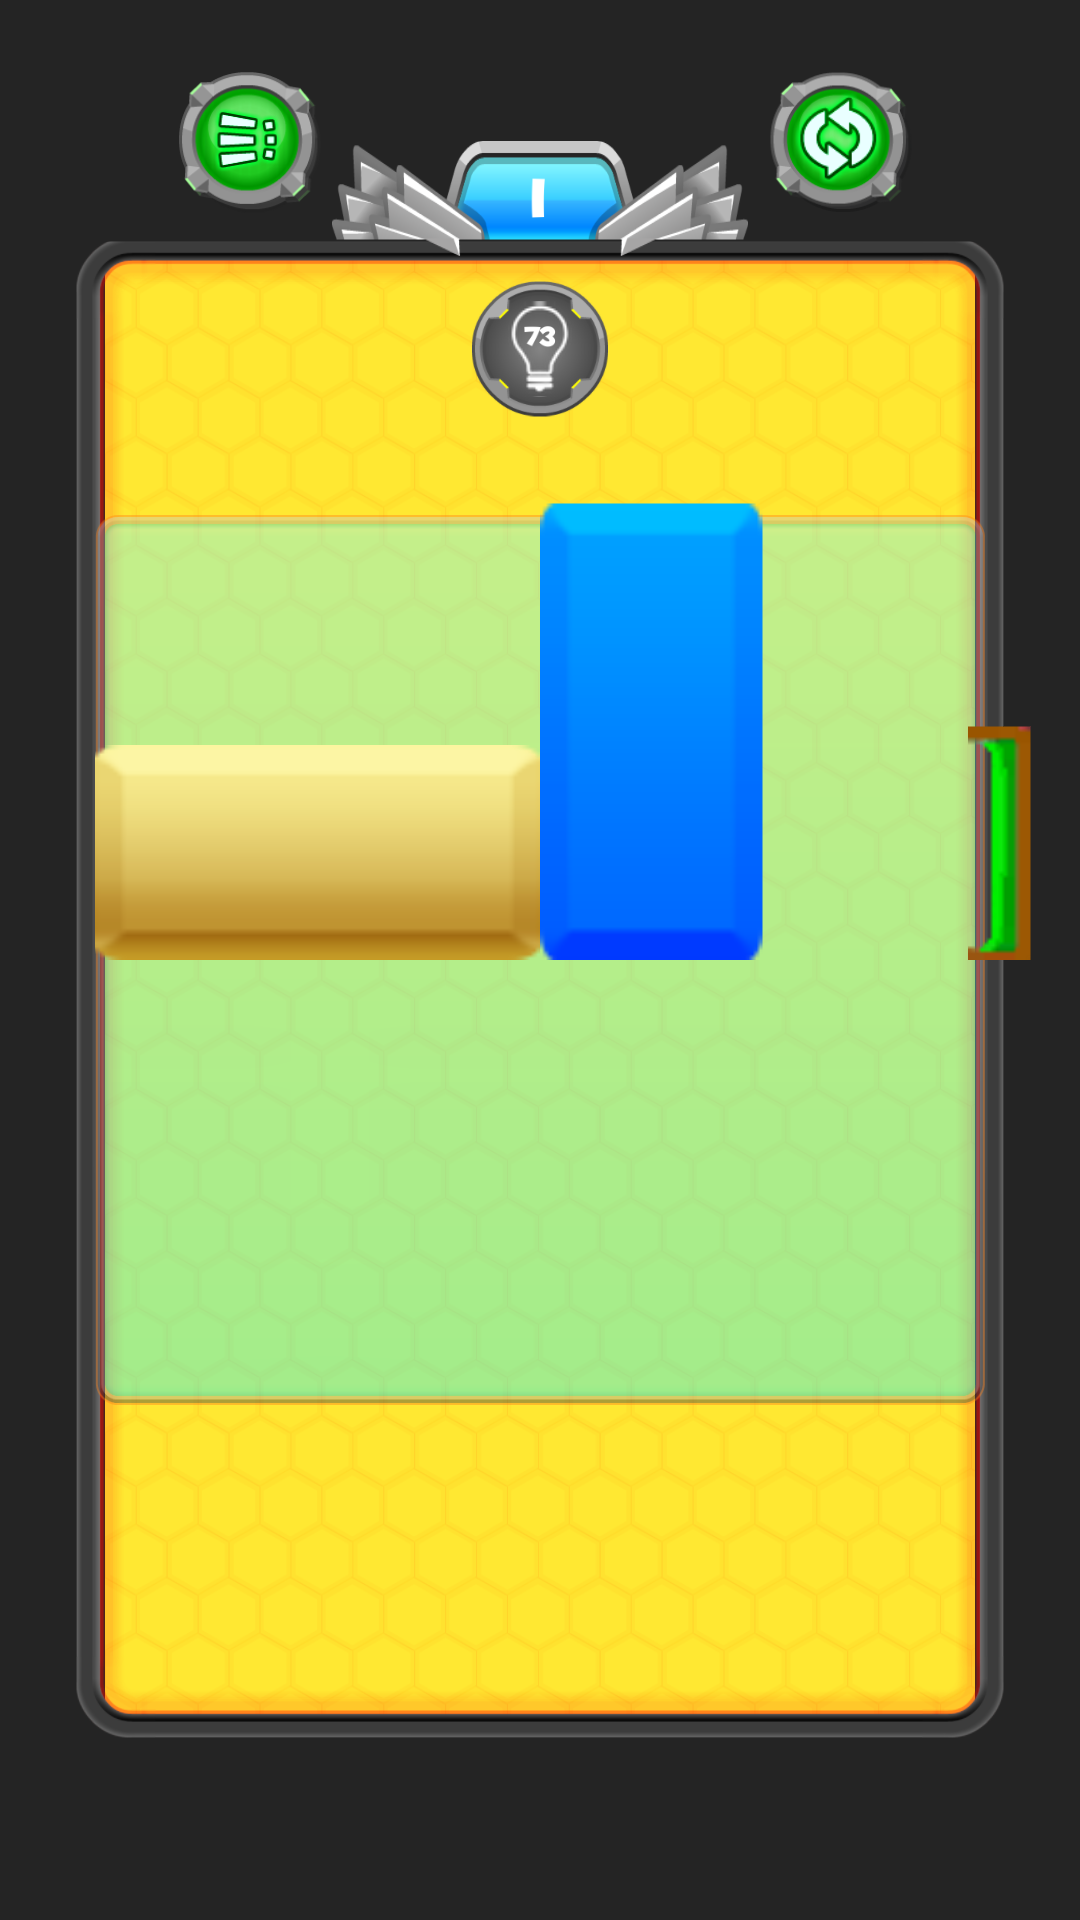 Geometry Rush - Block Dash APK (Android Game) - Free Download